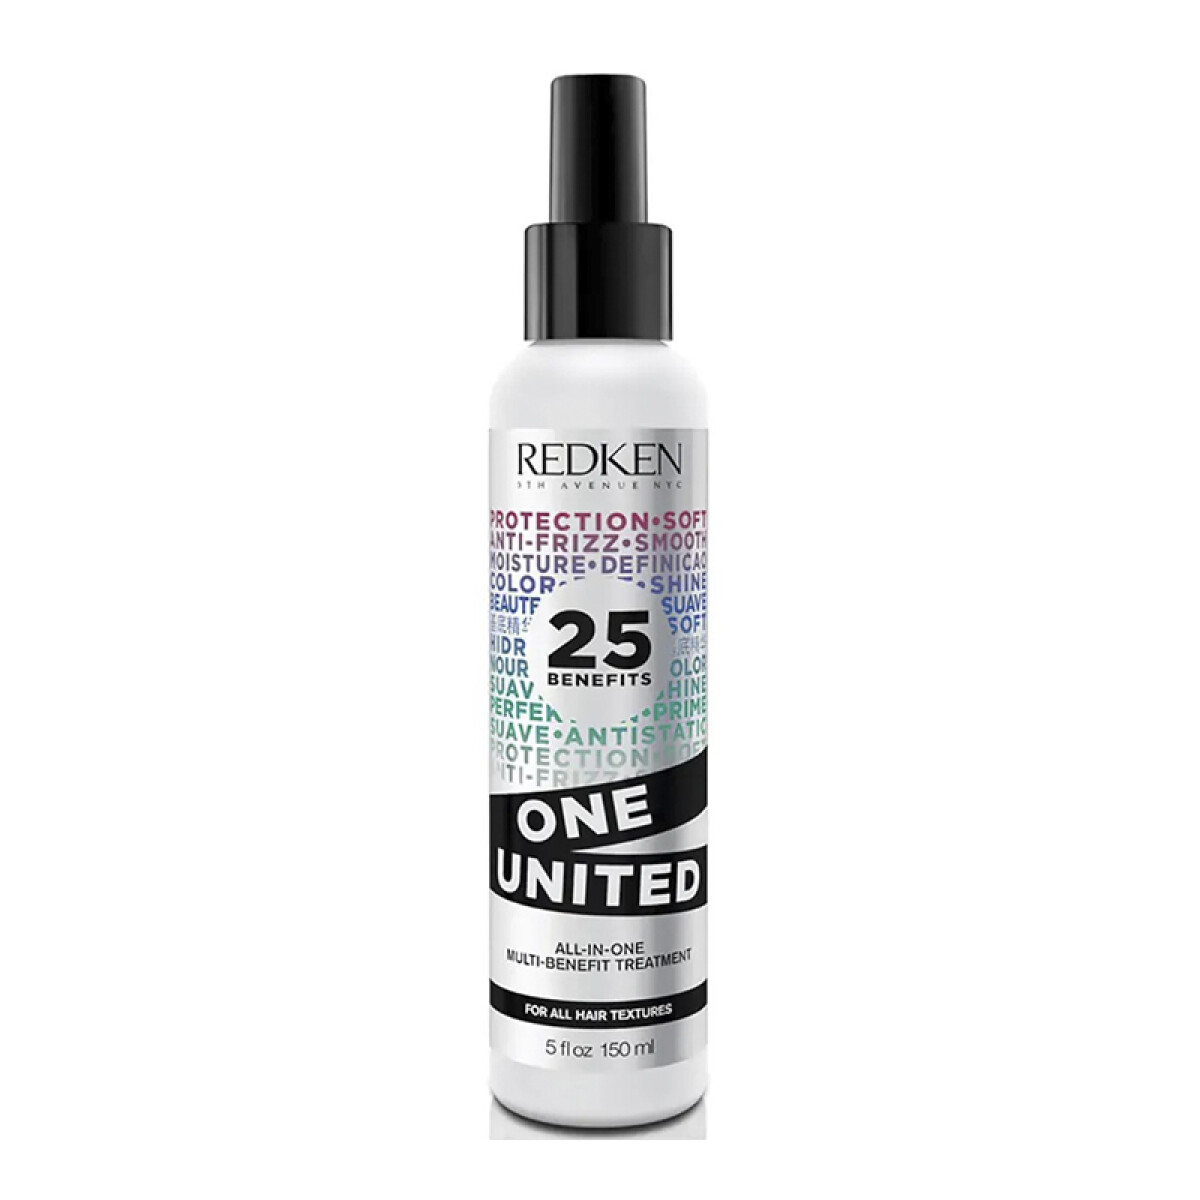 Redken Tratamiento One United Elixir 25 Beneficios 150 ml 